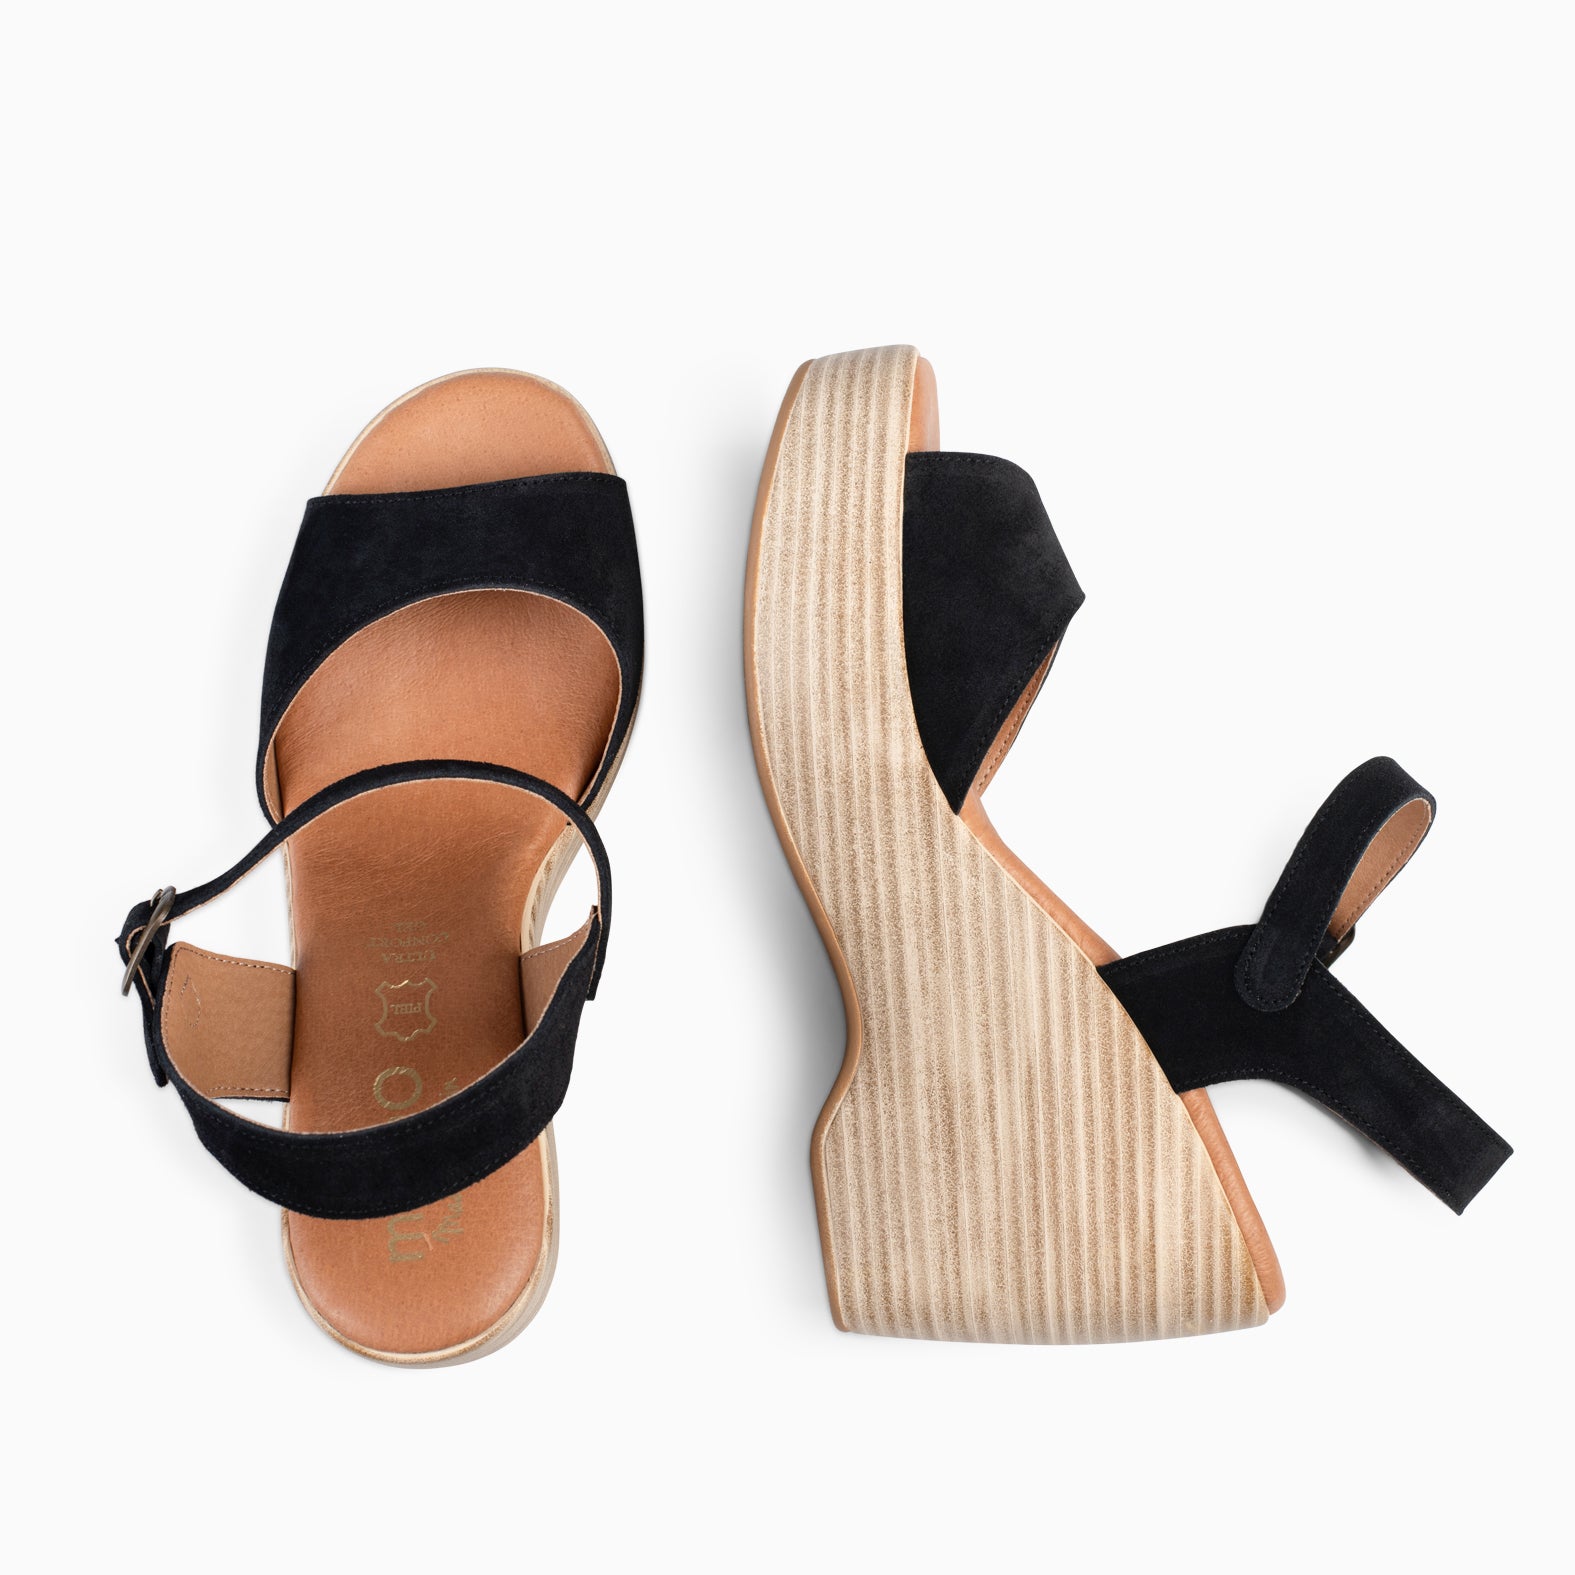 SIDNEY – BLACK wedge sandals